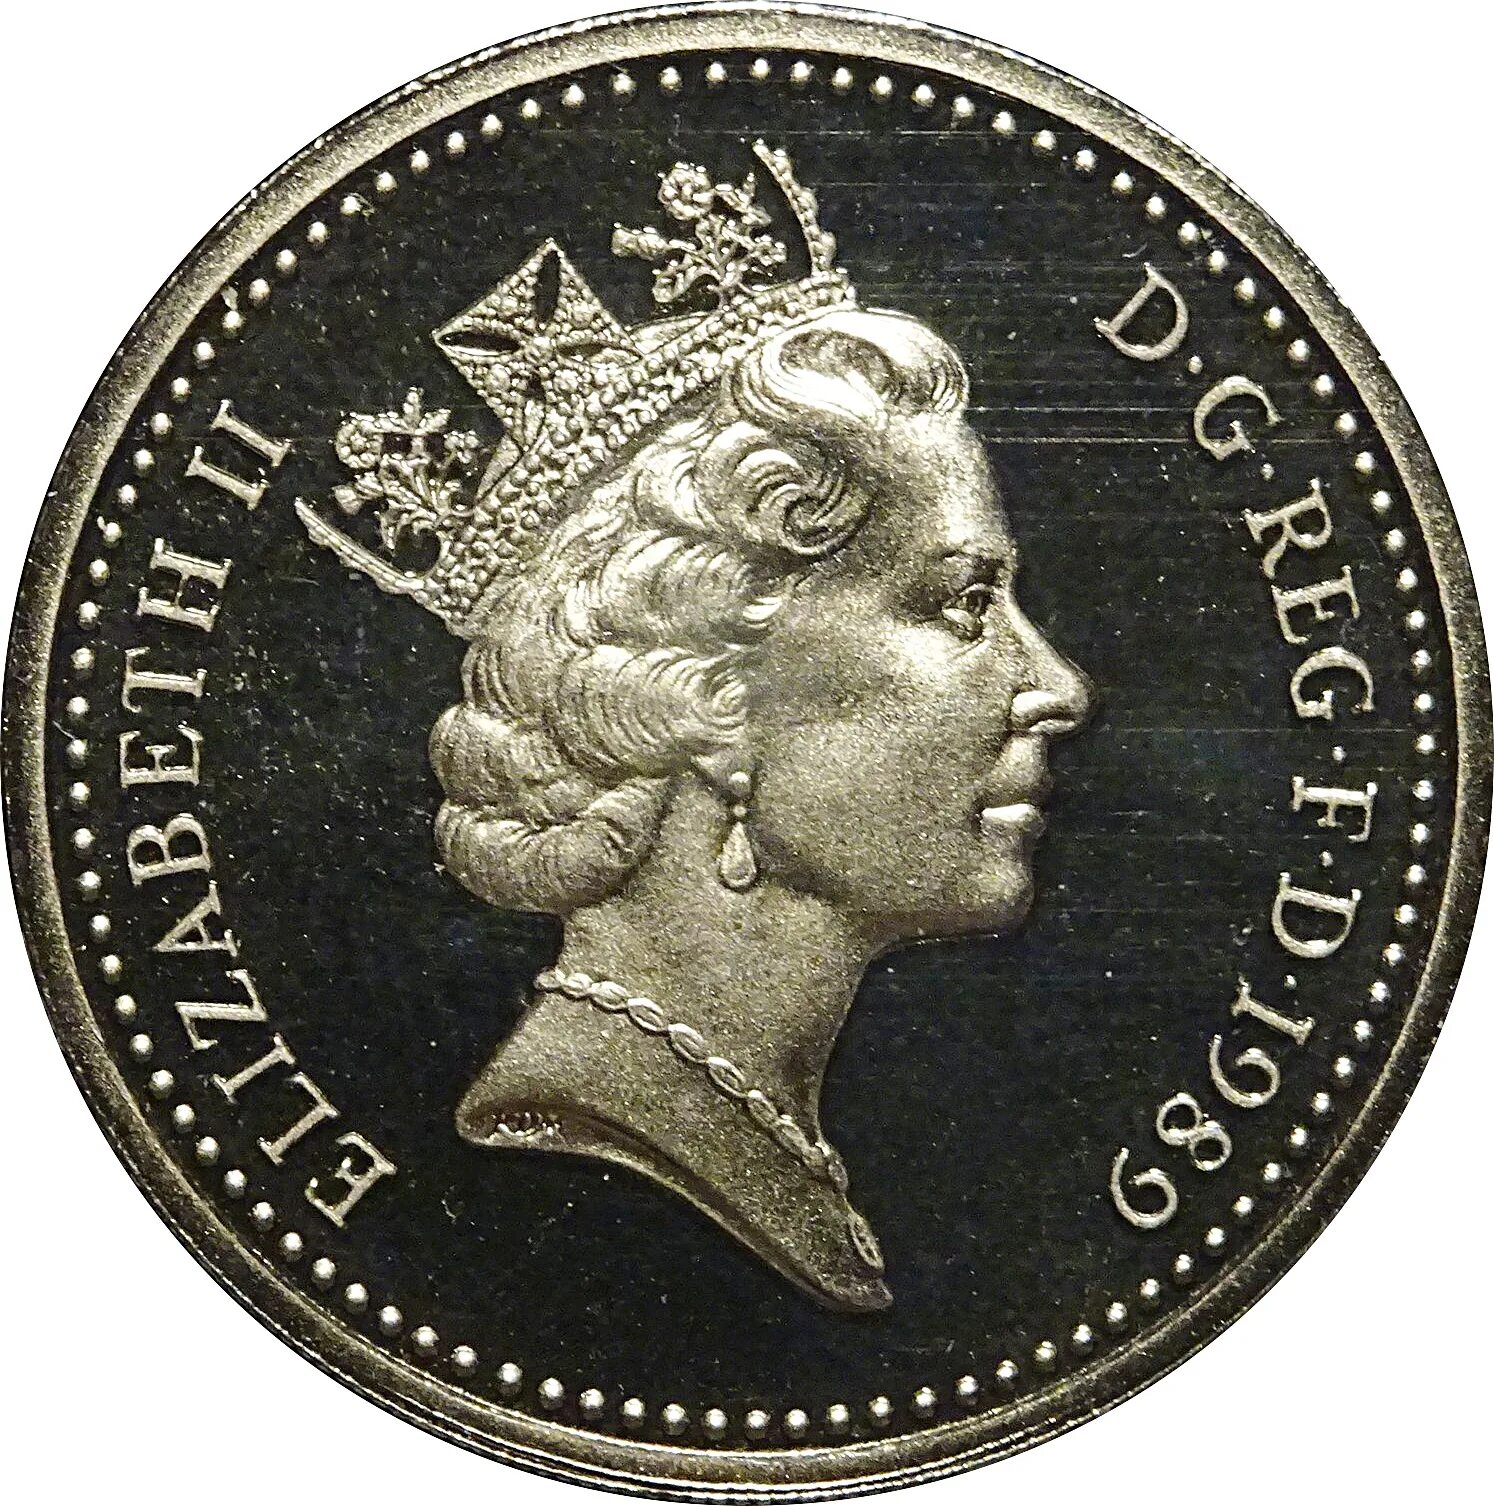 First coins. Монета с Елизаветой 2 one pound. Монета Elizabeth 2. Монеты Елизаветы 2 Великобритания.